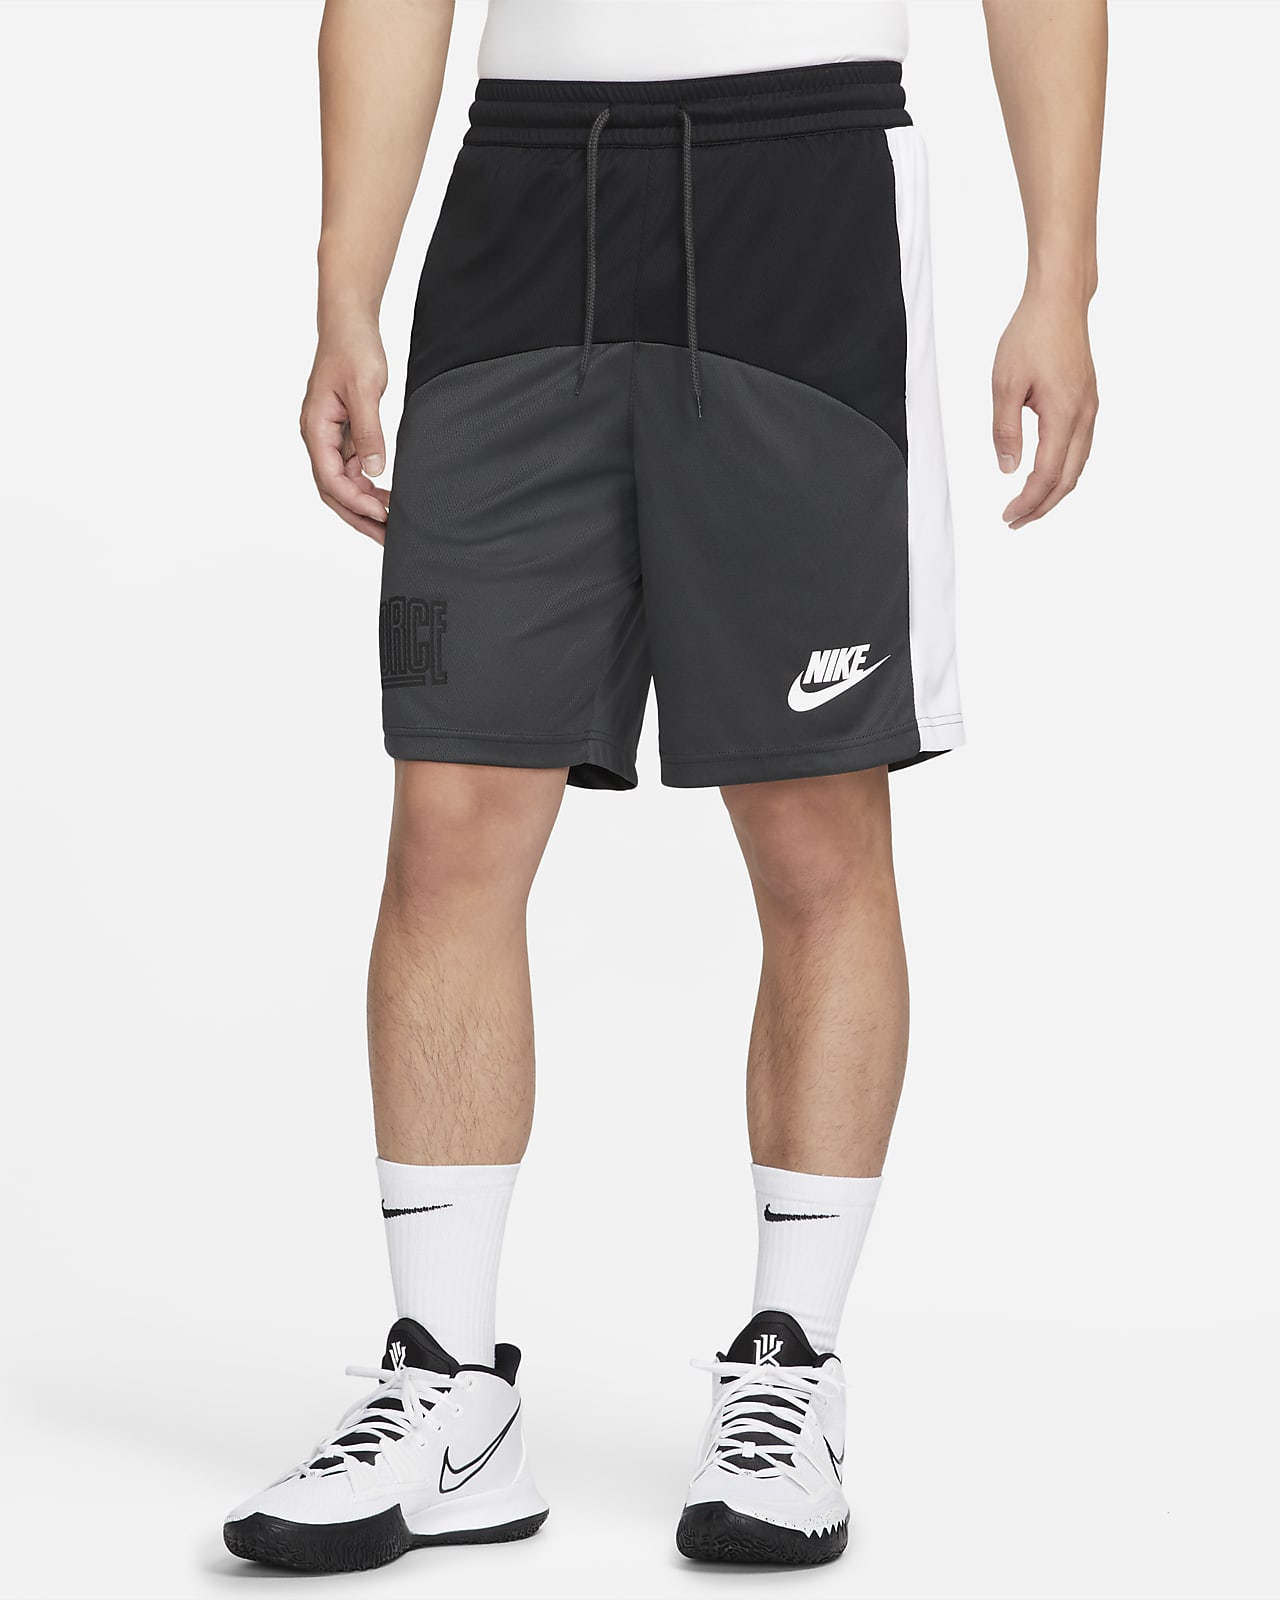 Nike Dri-FIT Starting 5 男款 11" 籃球褲